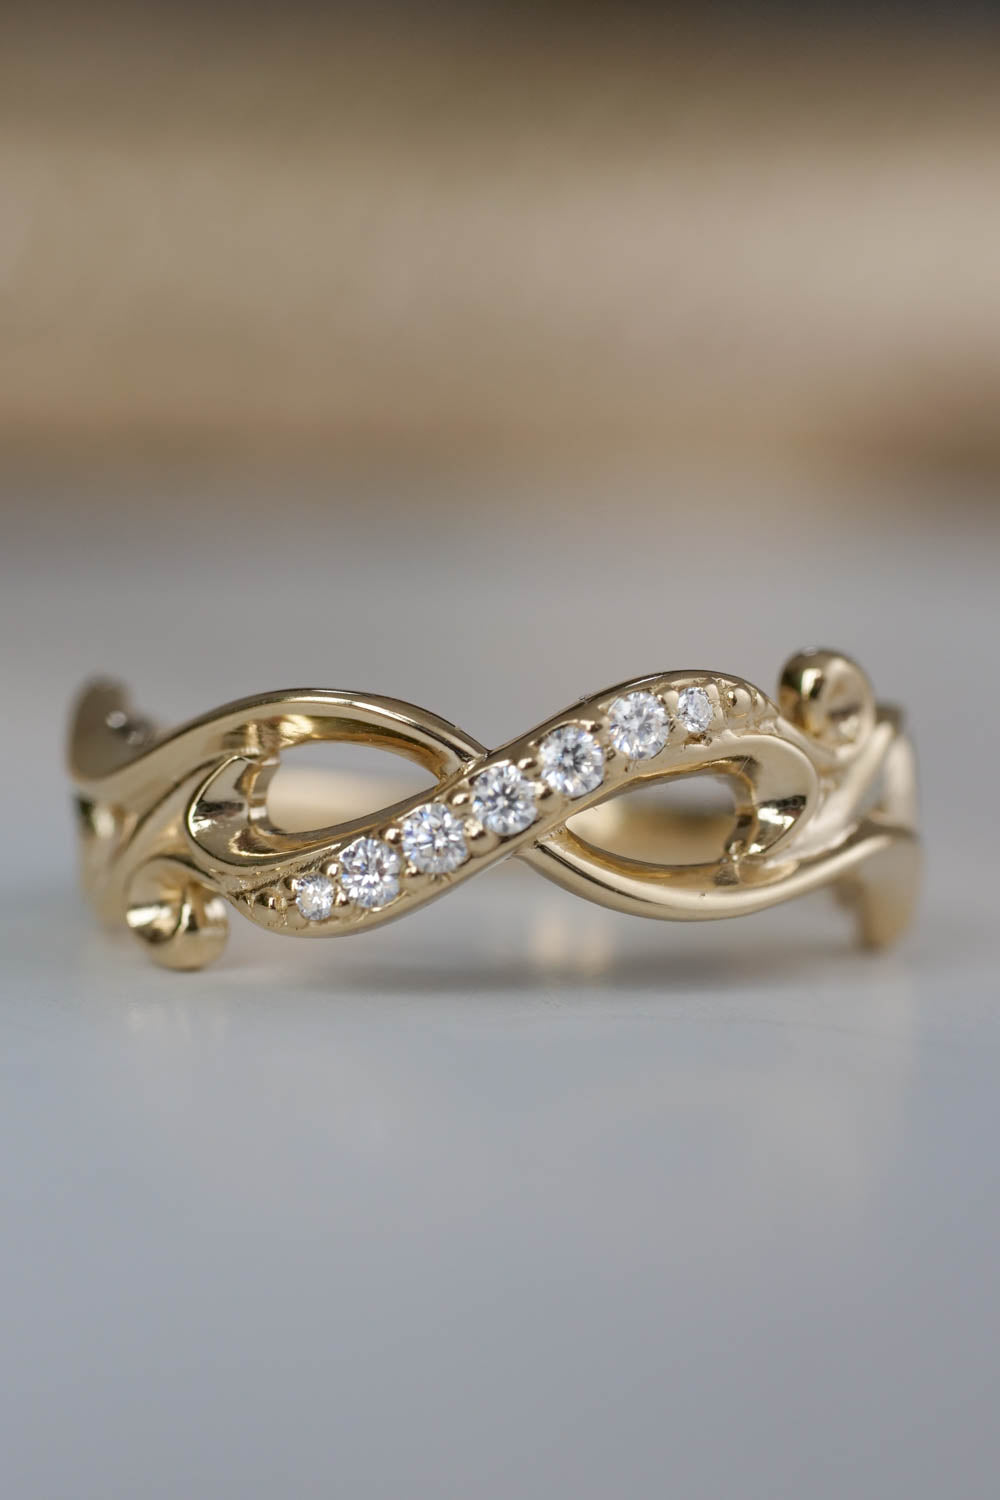 Infinity wedding band with diamonds | Gold wedding ring | Eden Garden  Jewelry™